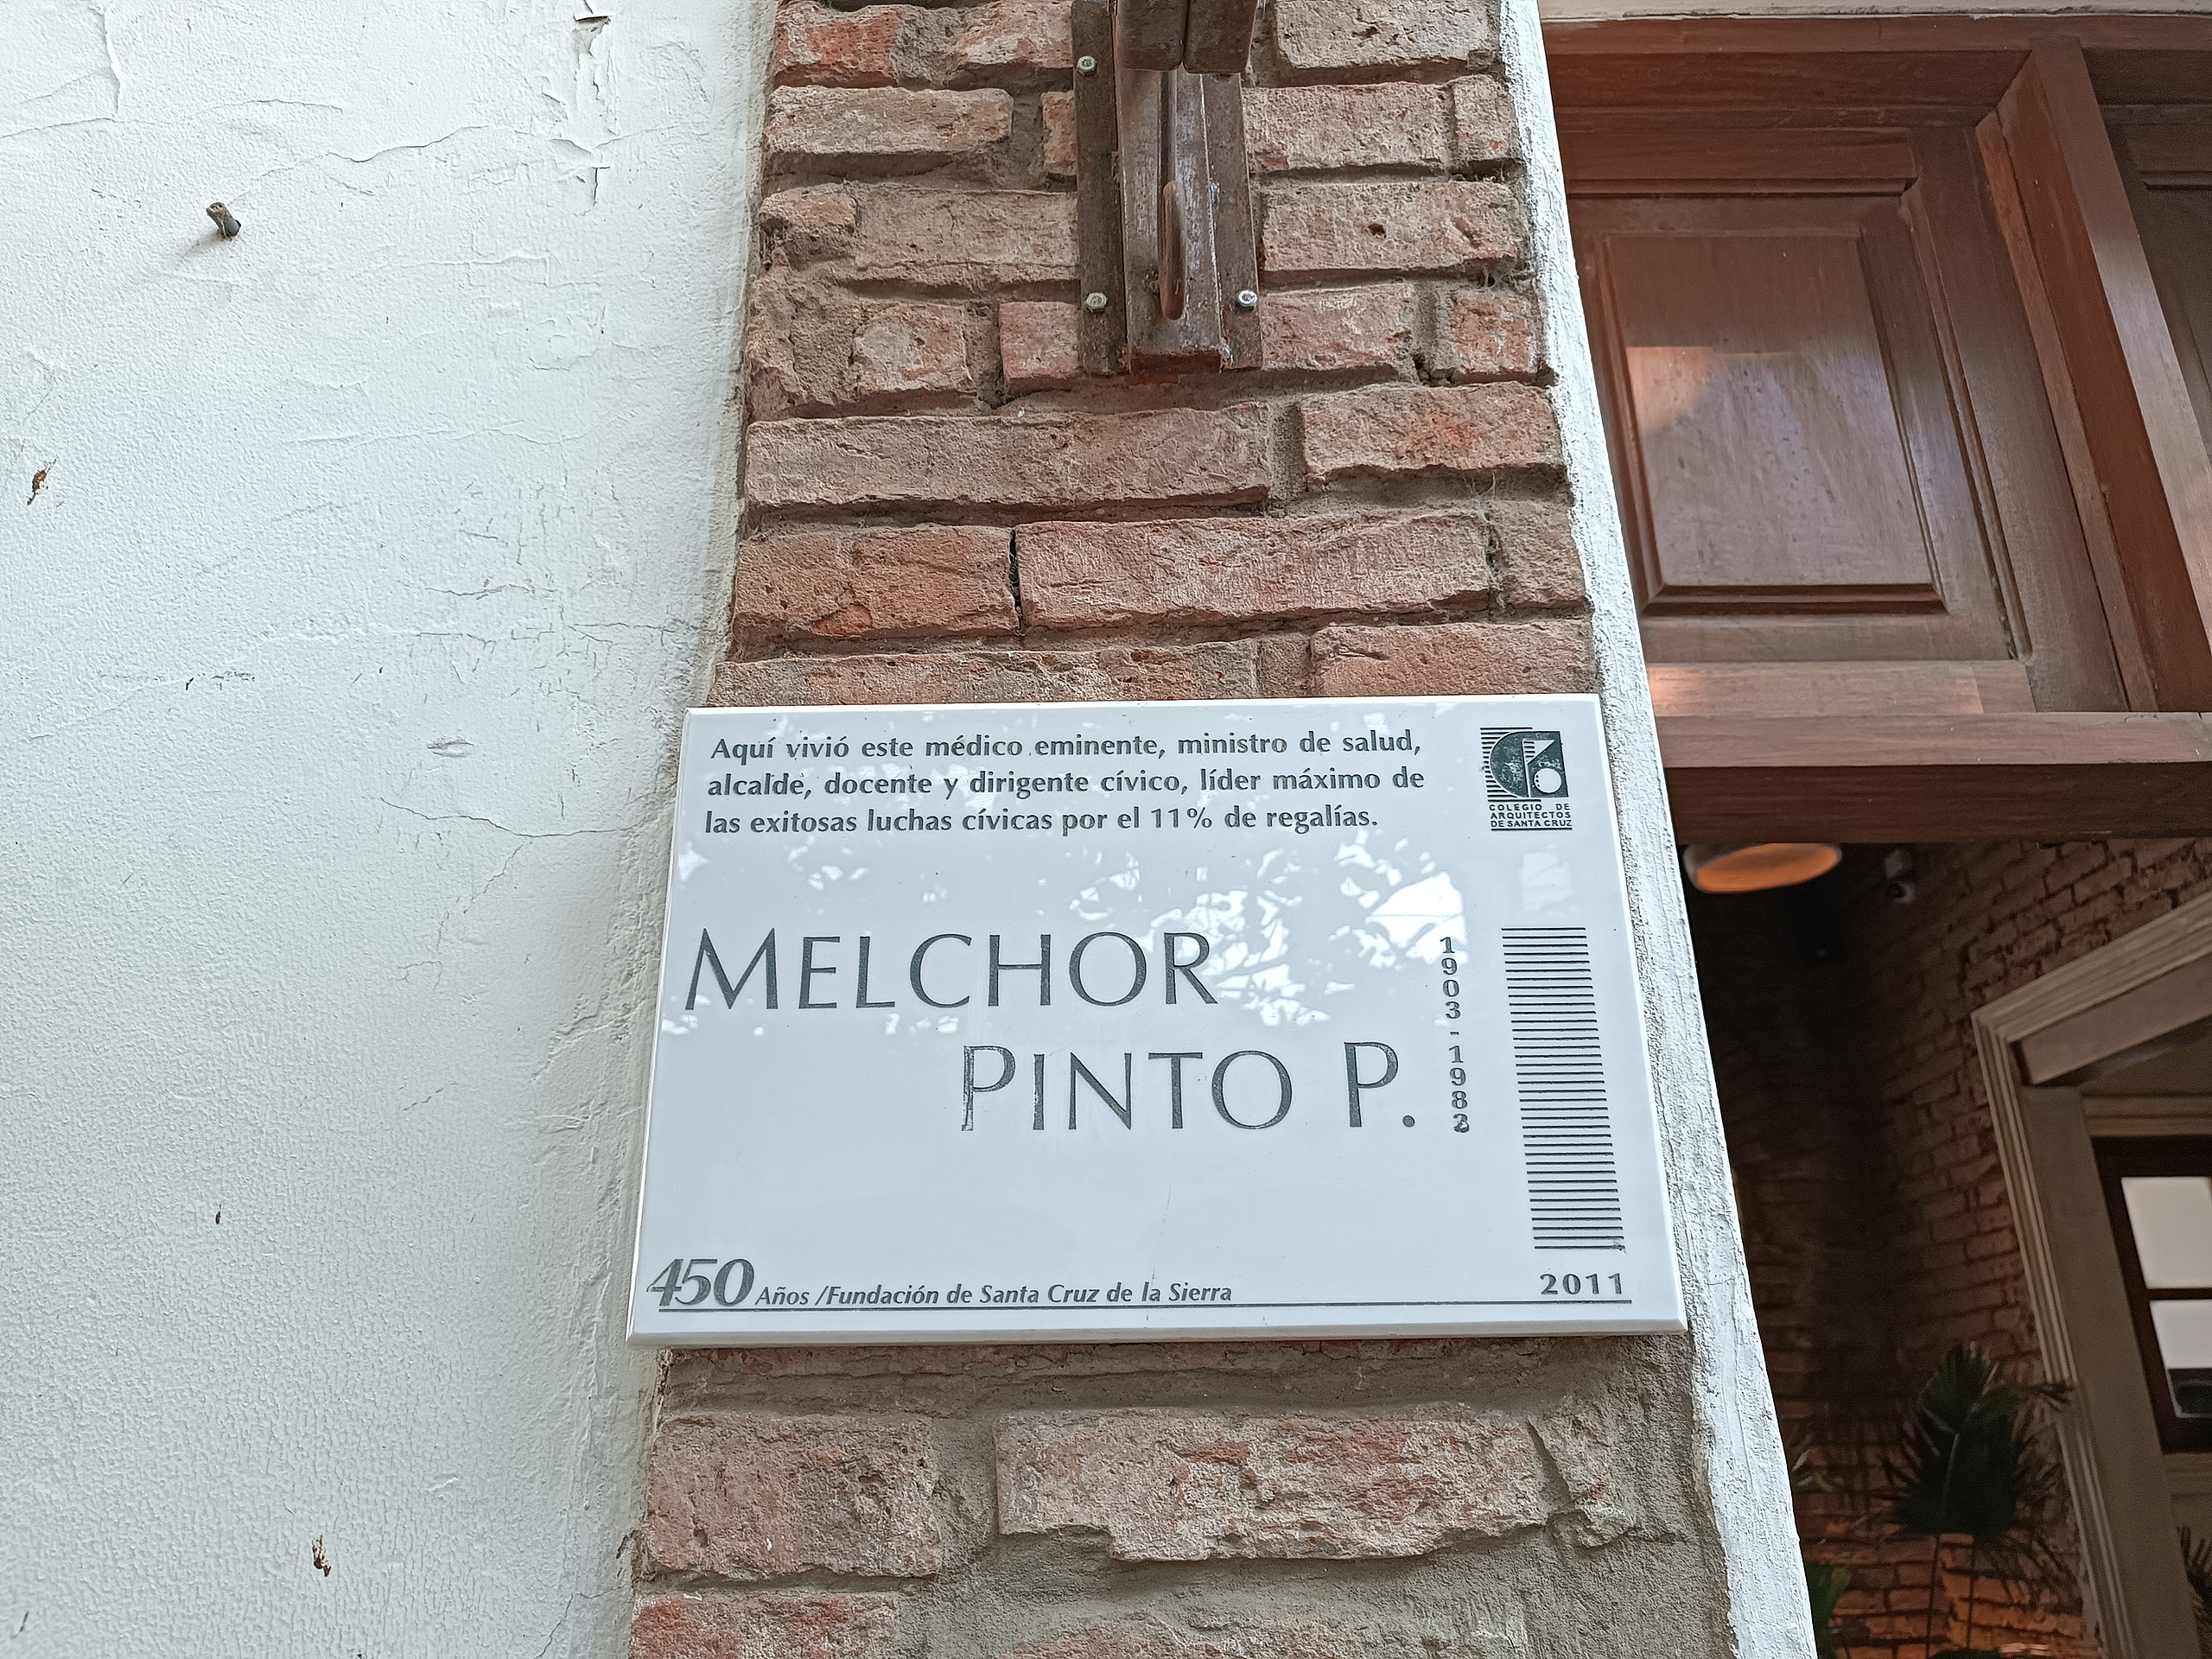 File:Fachada casa Melchor Pinto.jpg - Wikimedia Commons